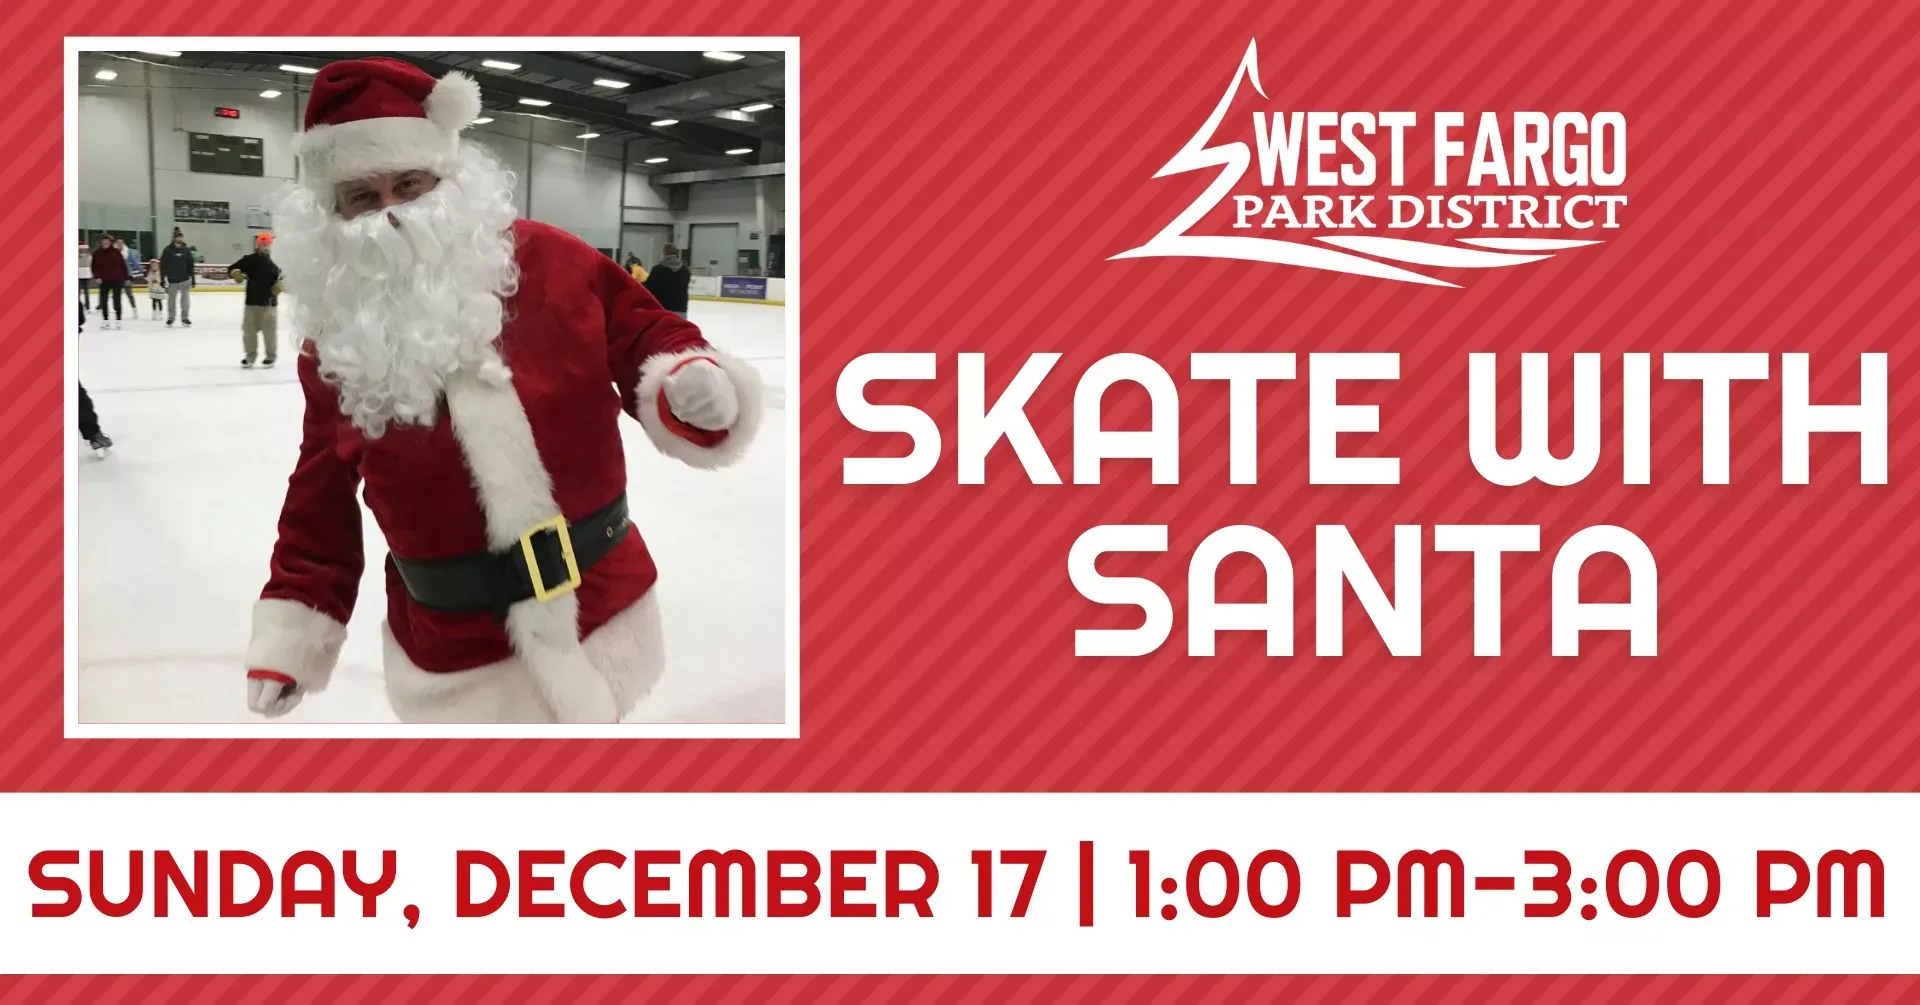 Skate with Santa